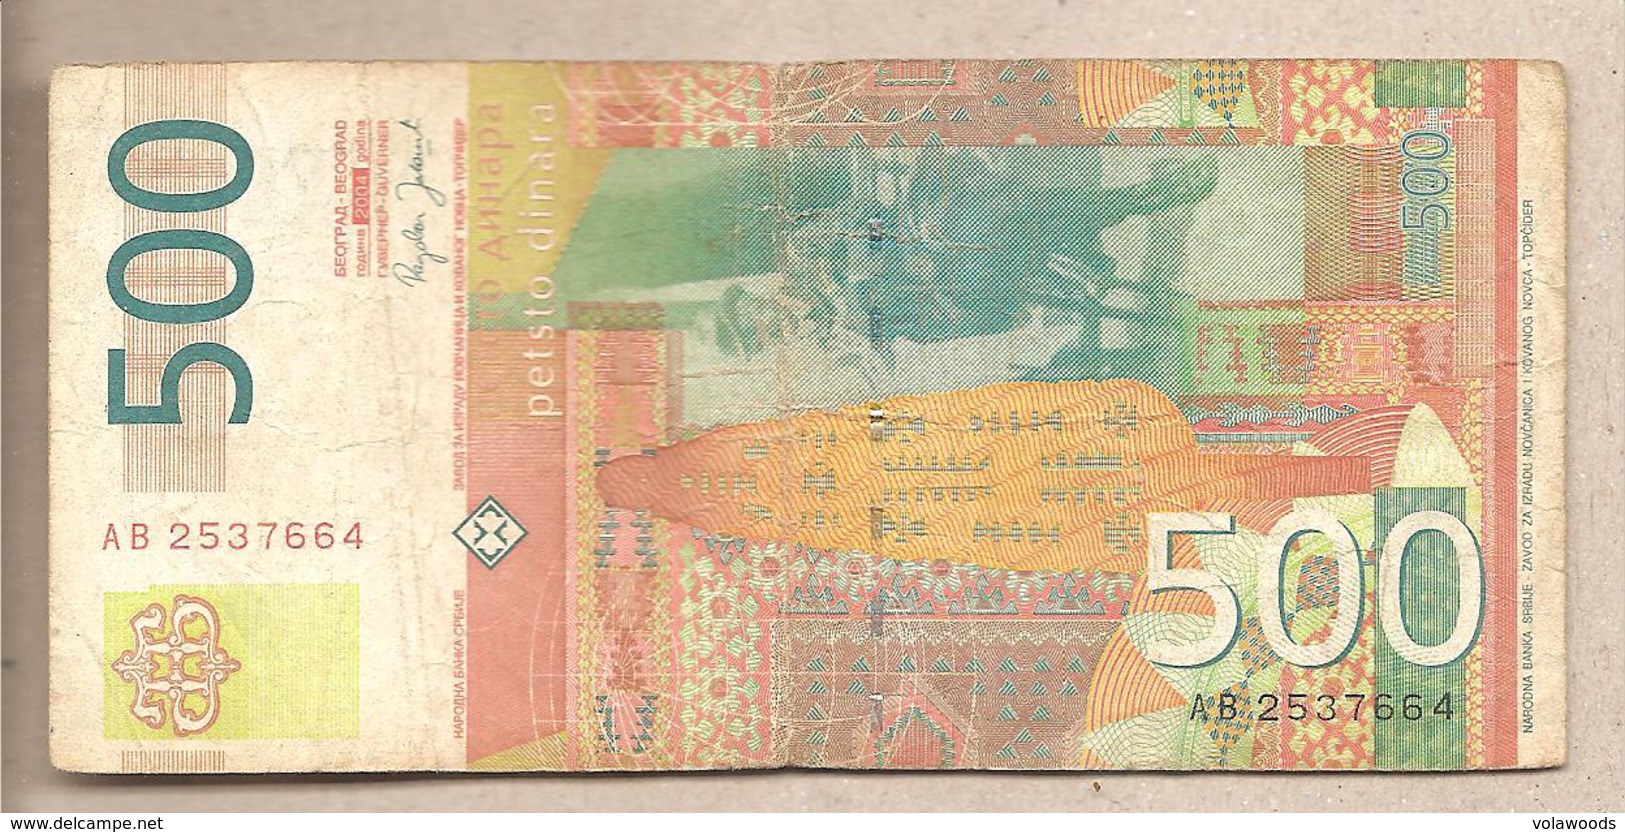 Serbia - Banconota Circolata Da 500  Dinari - 2004 - Serbien